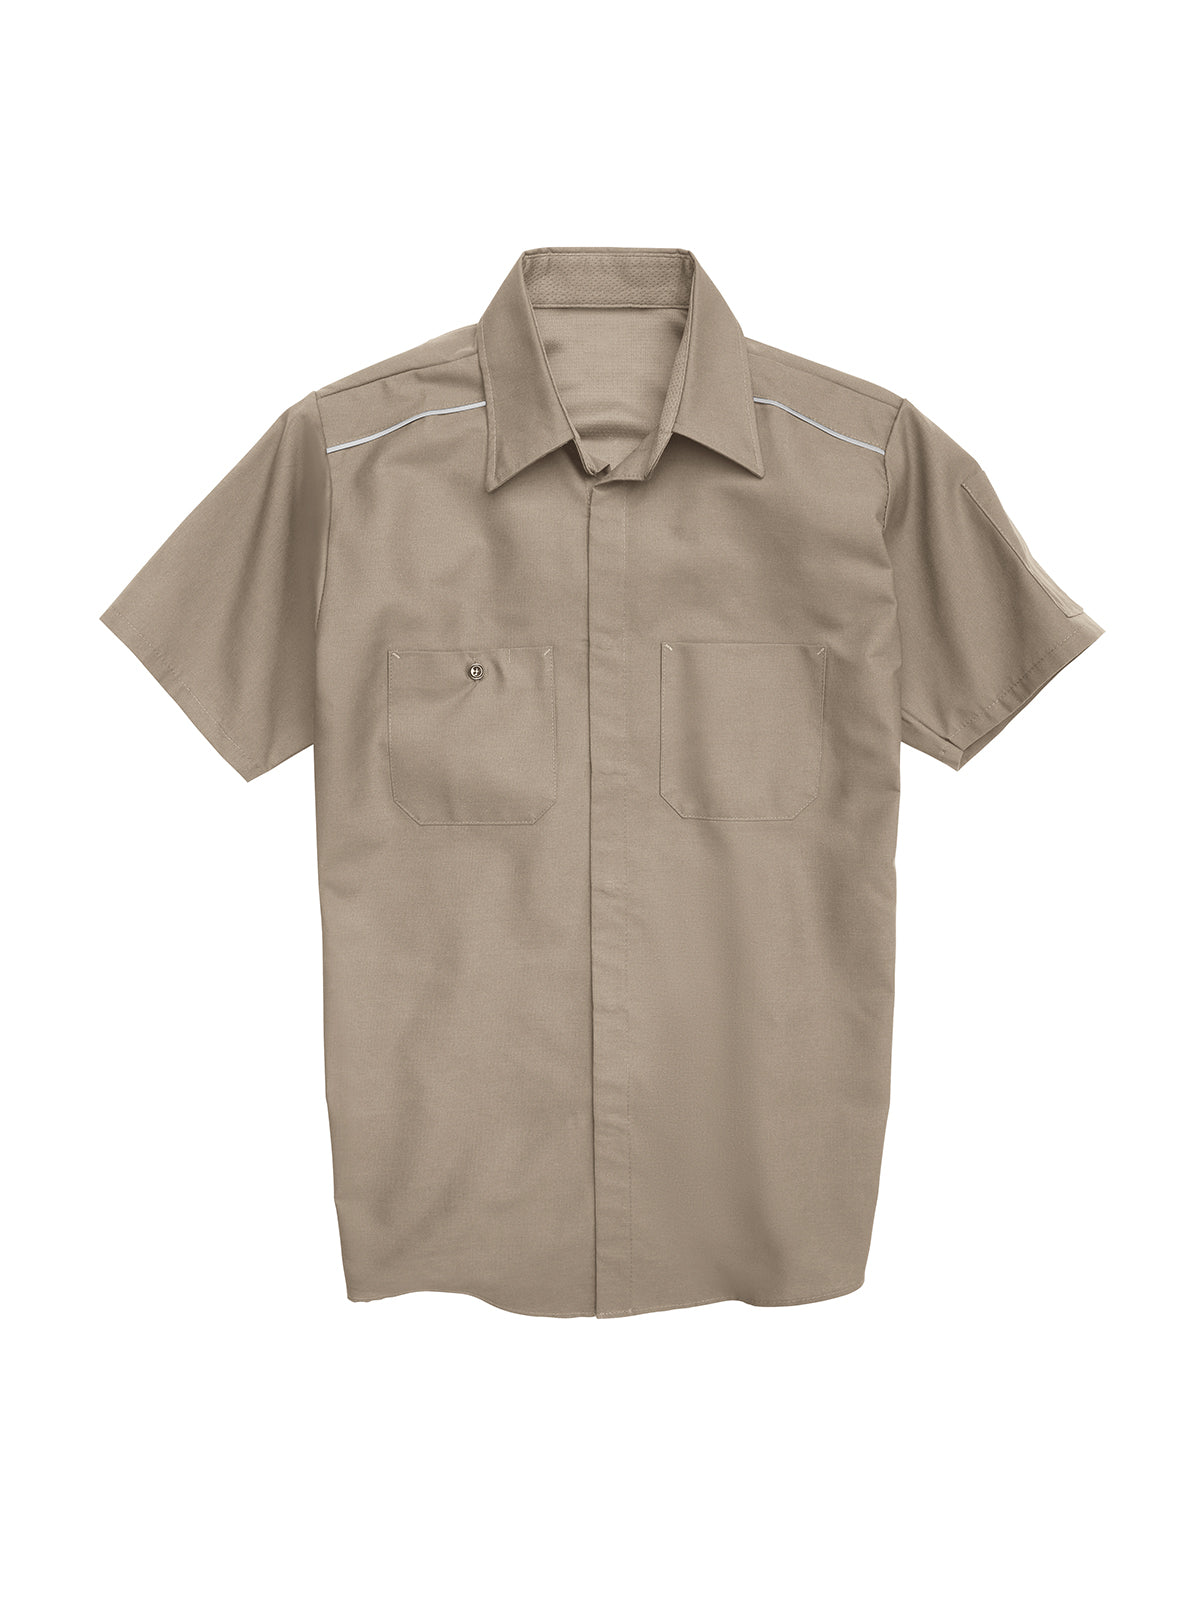 Men's Short Sleeve Pro Airflow Work Shirt - SP4A - Khaki